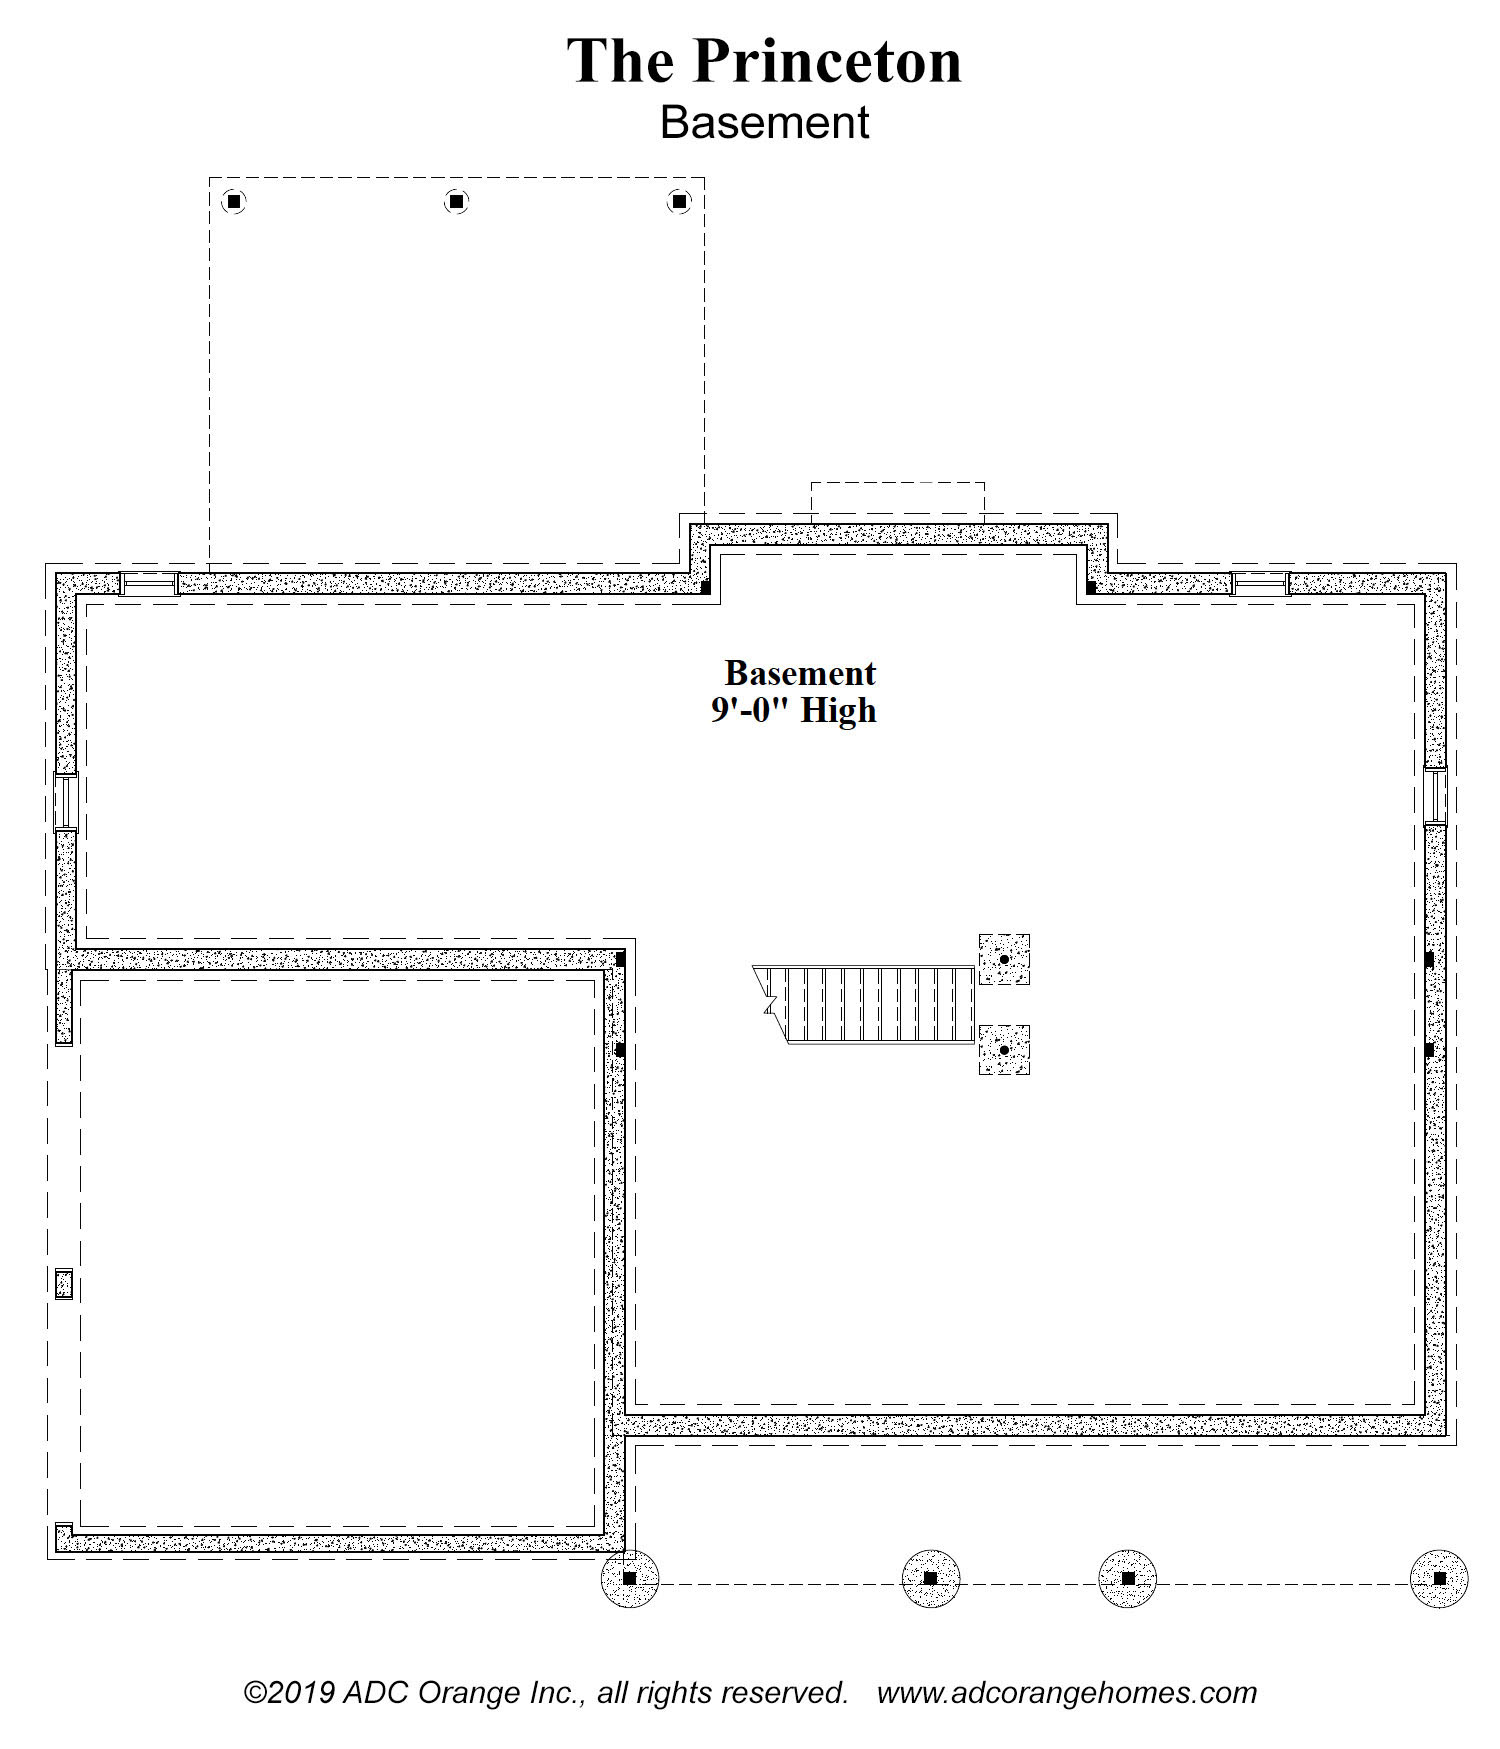 Basement Floor Plan - The Princeton